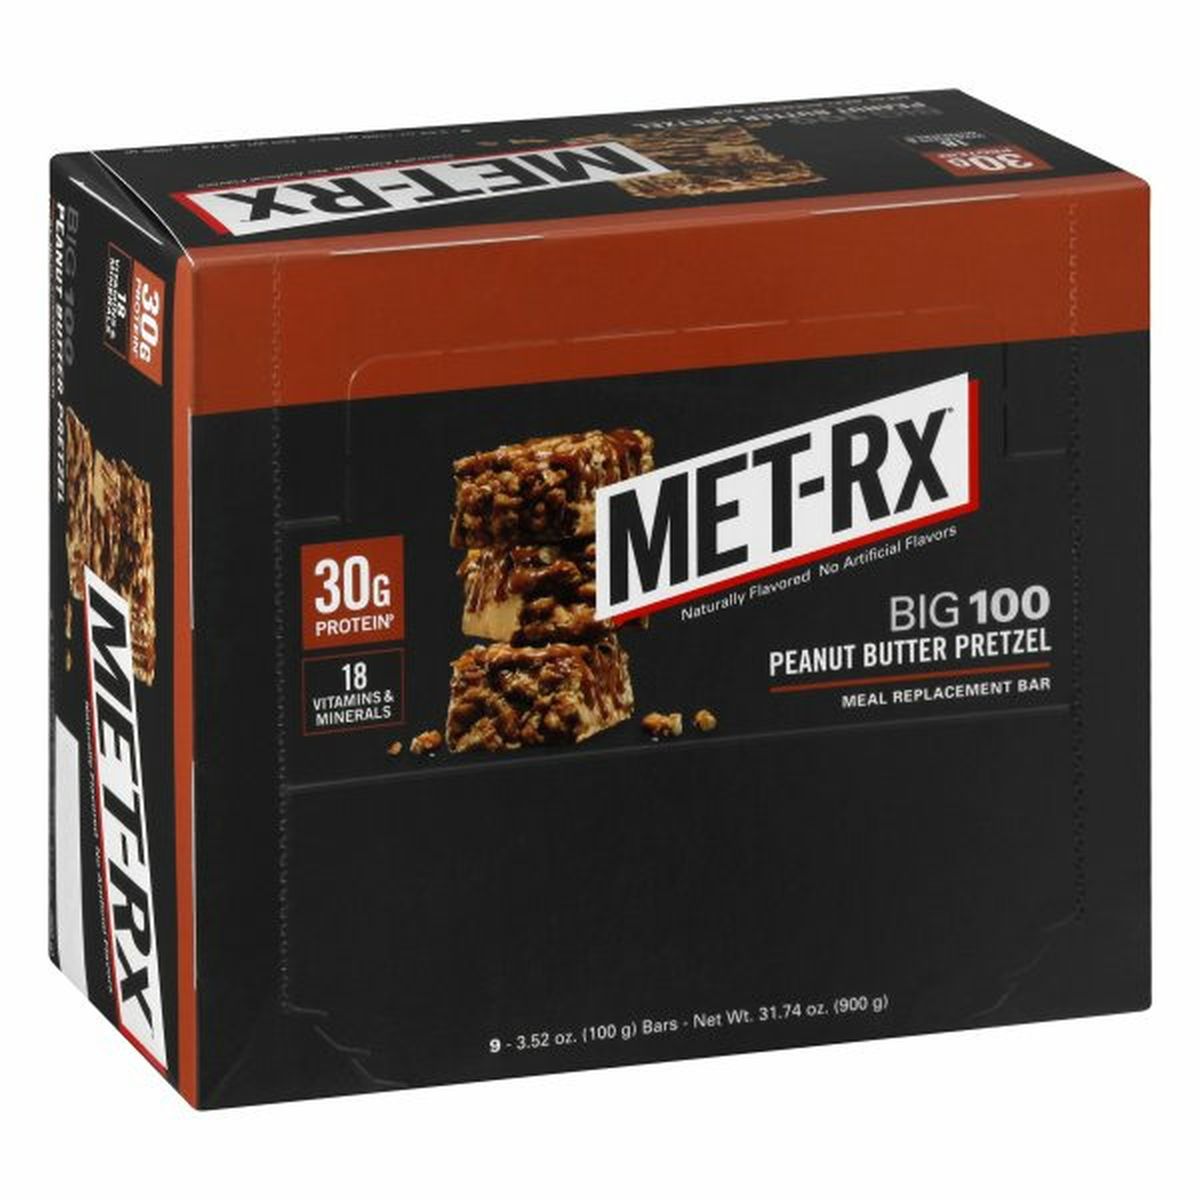 Calories in MET Rx Meal Replacement Bar, Peanut Butter Pretzel, Big 100